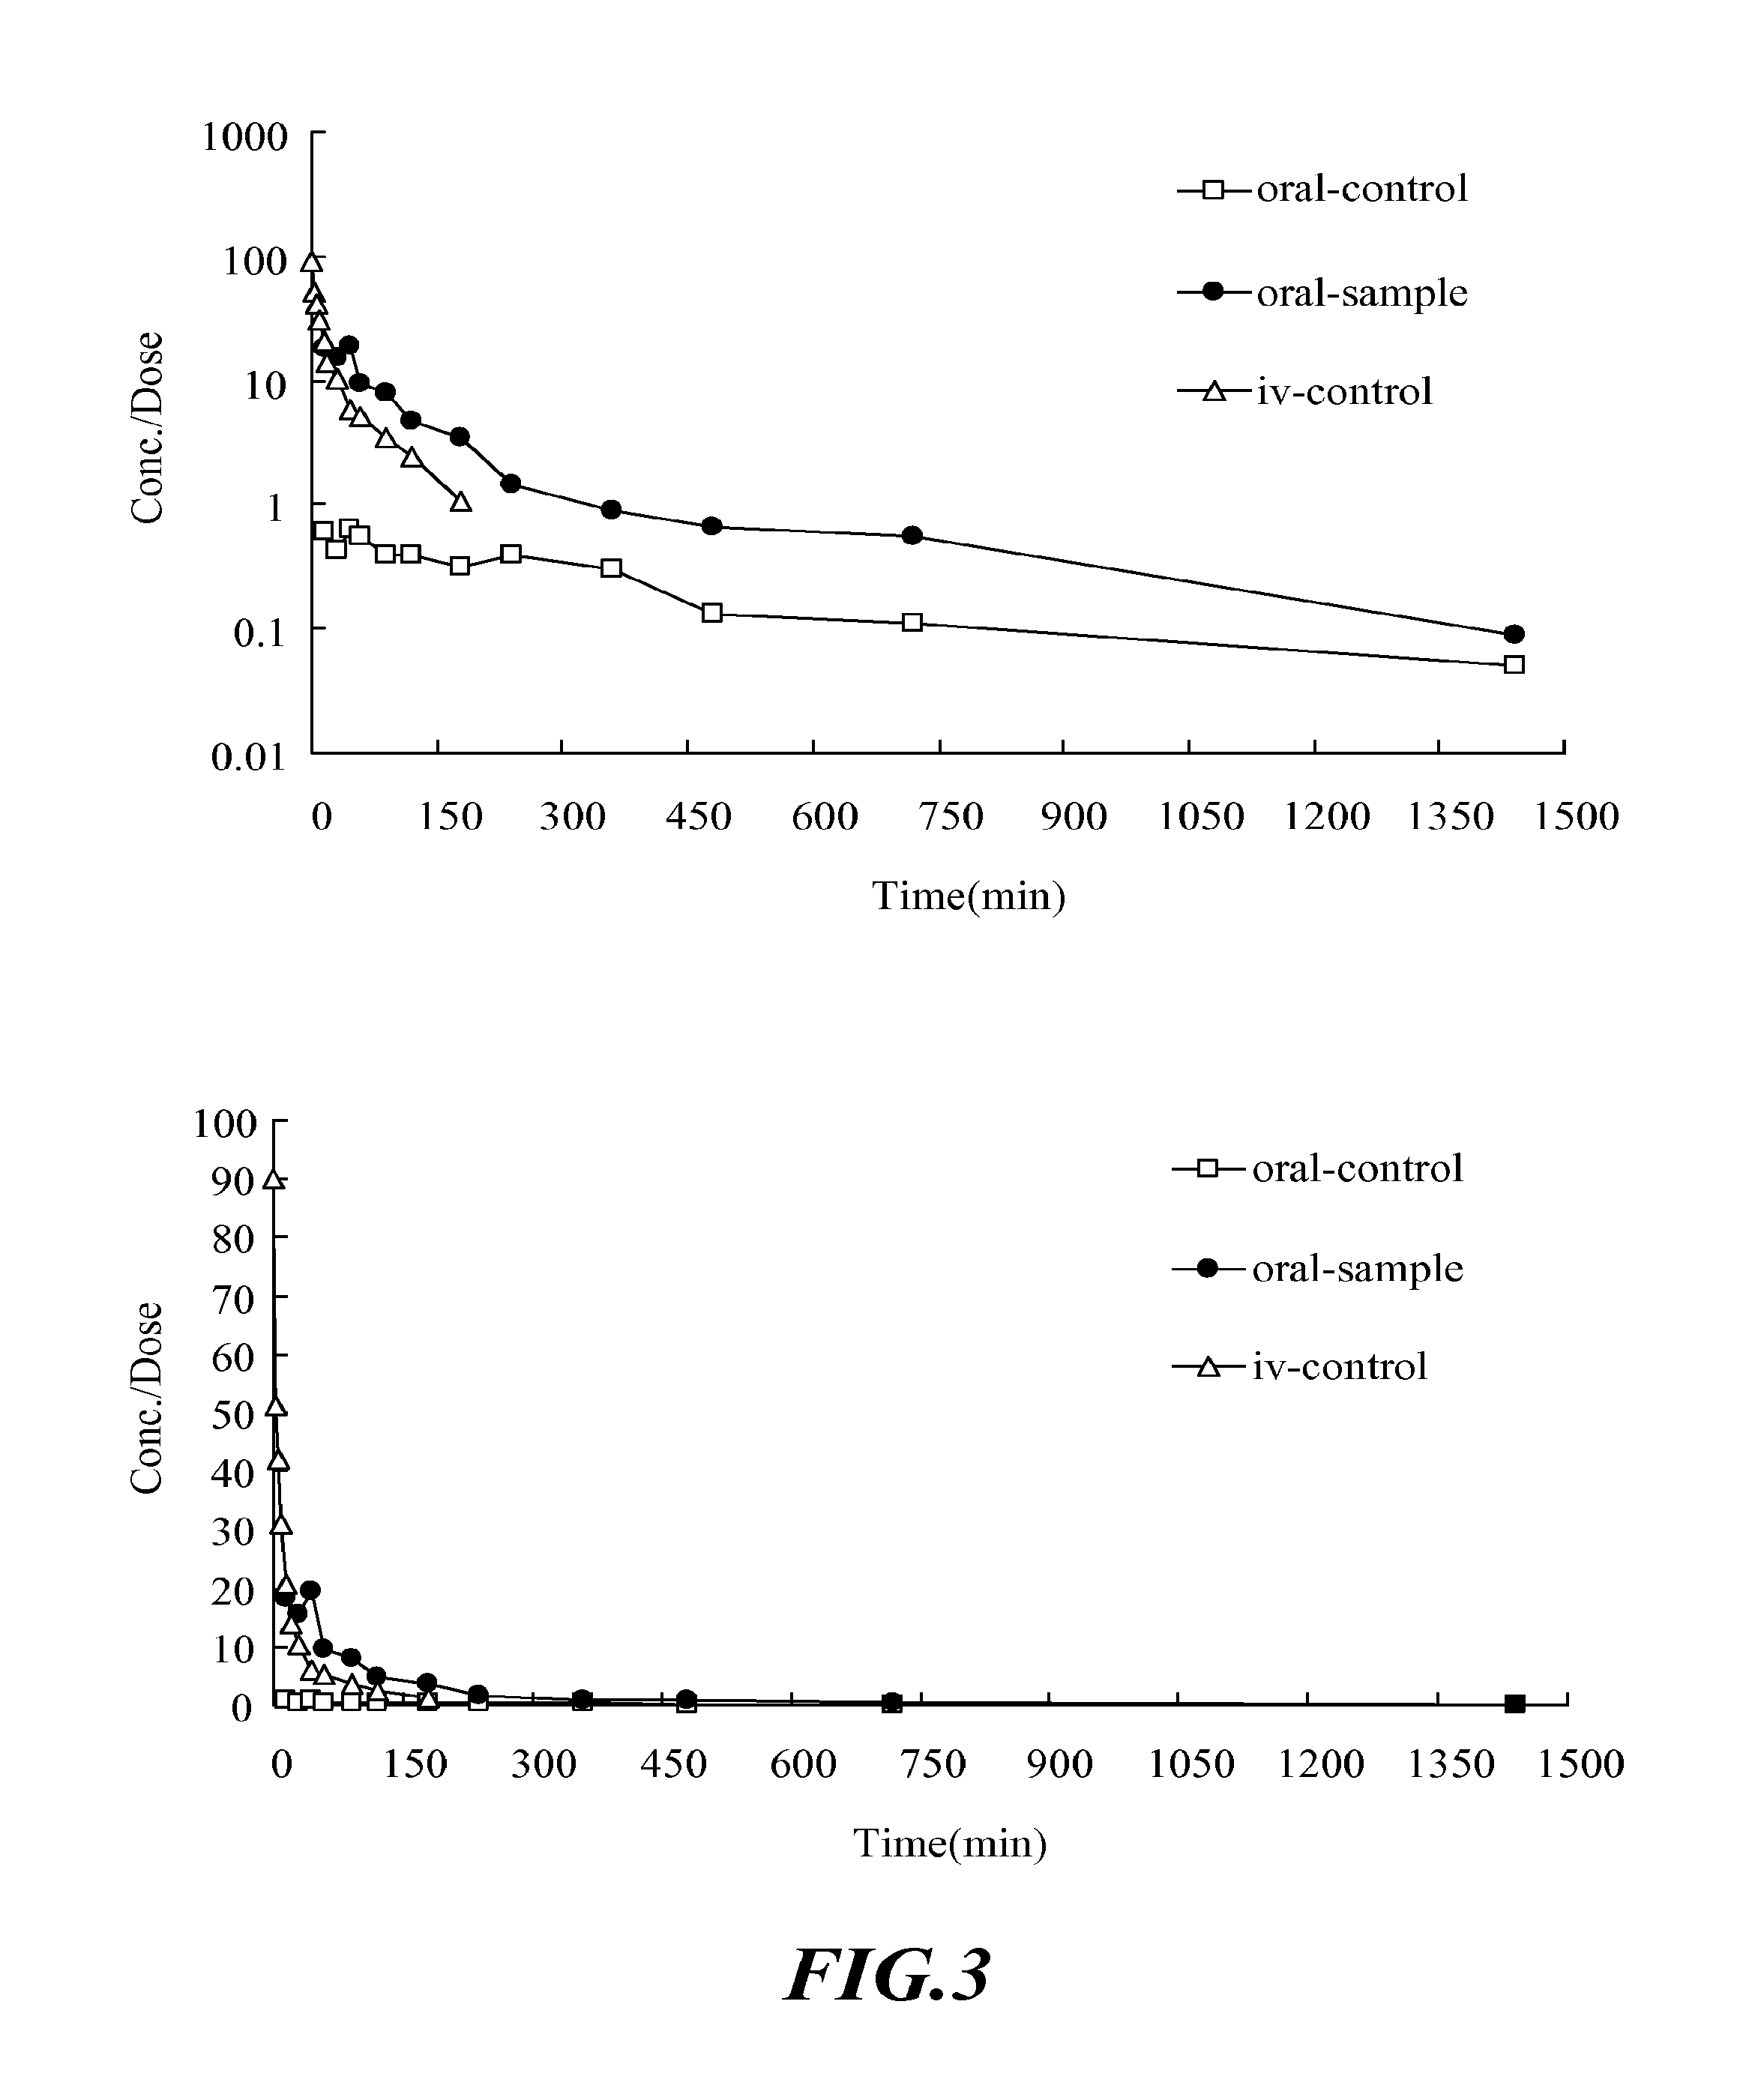 Inhibitors and enhancers of uridine diphosphate-glucuronosyltransferase 2b (UGT2B)